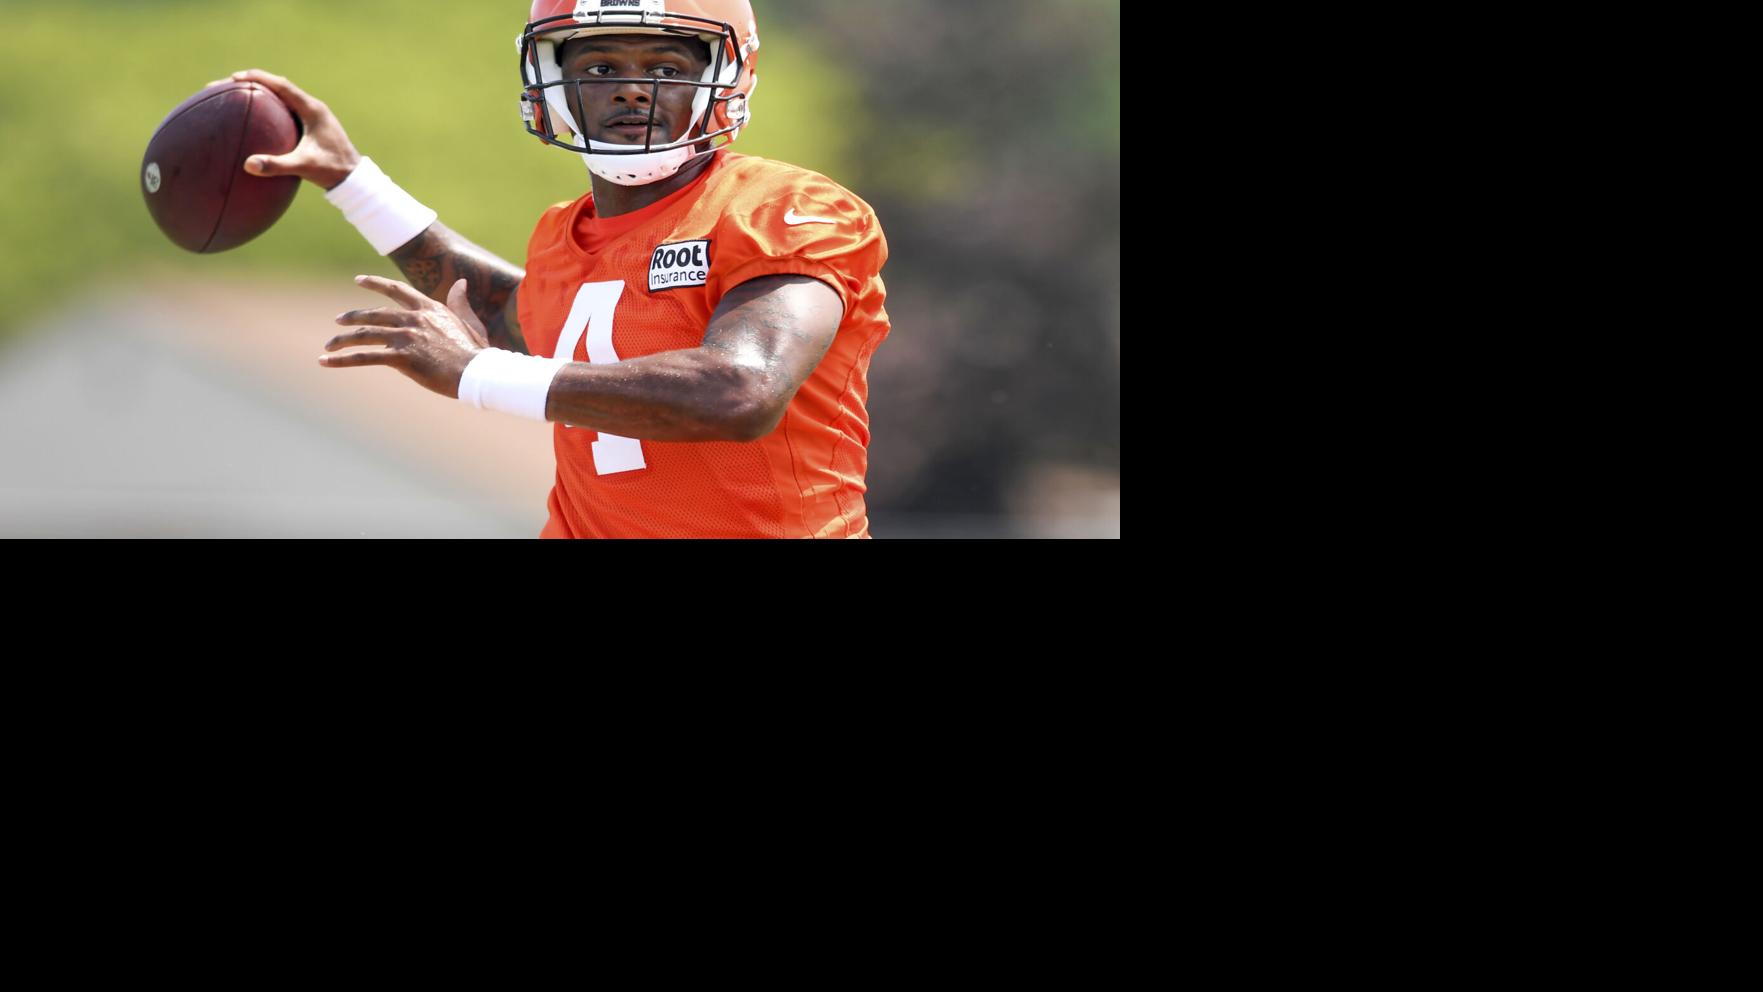 NFL appeals 6-game suspension for Cleveland Browns quarterback Deshaun Watson